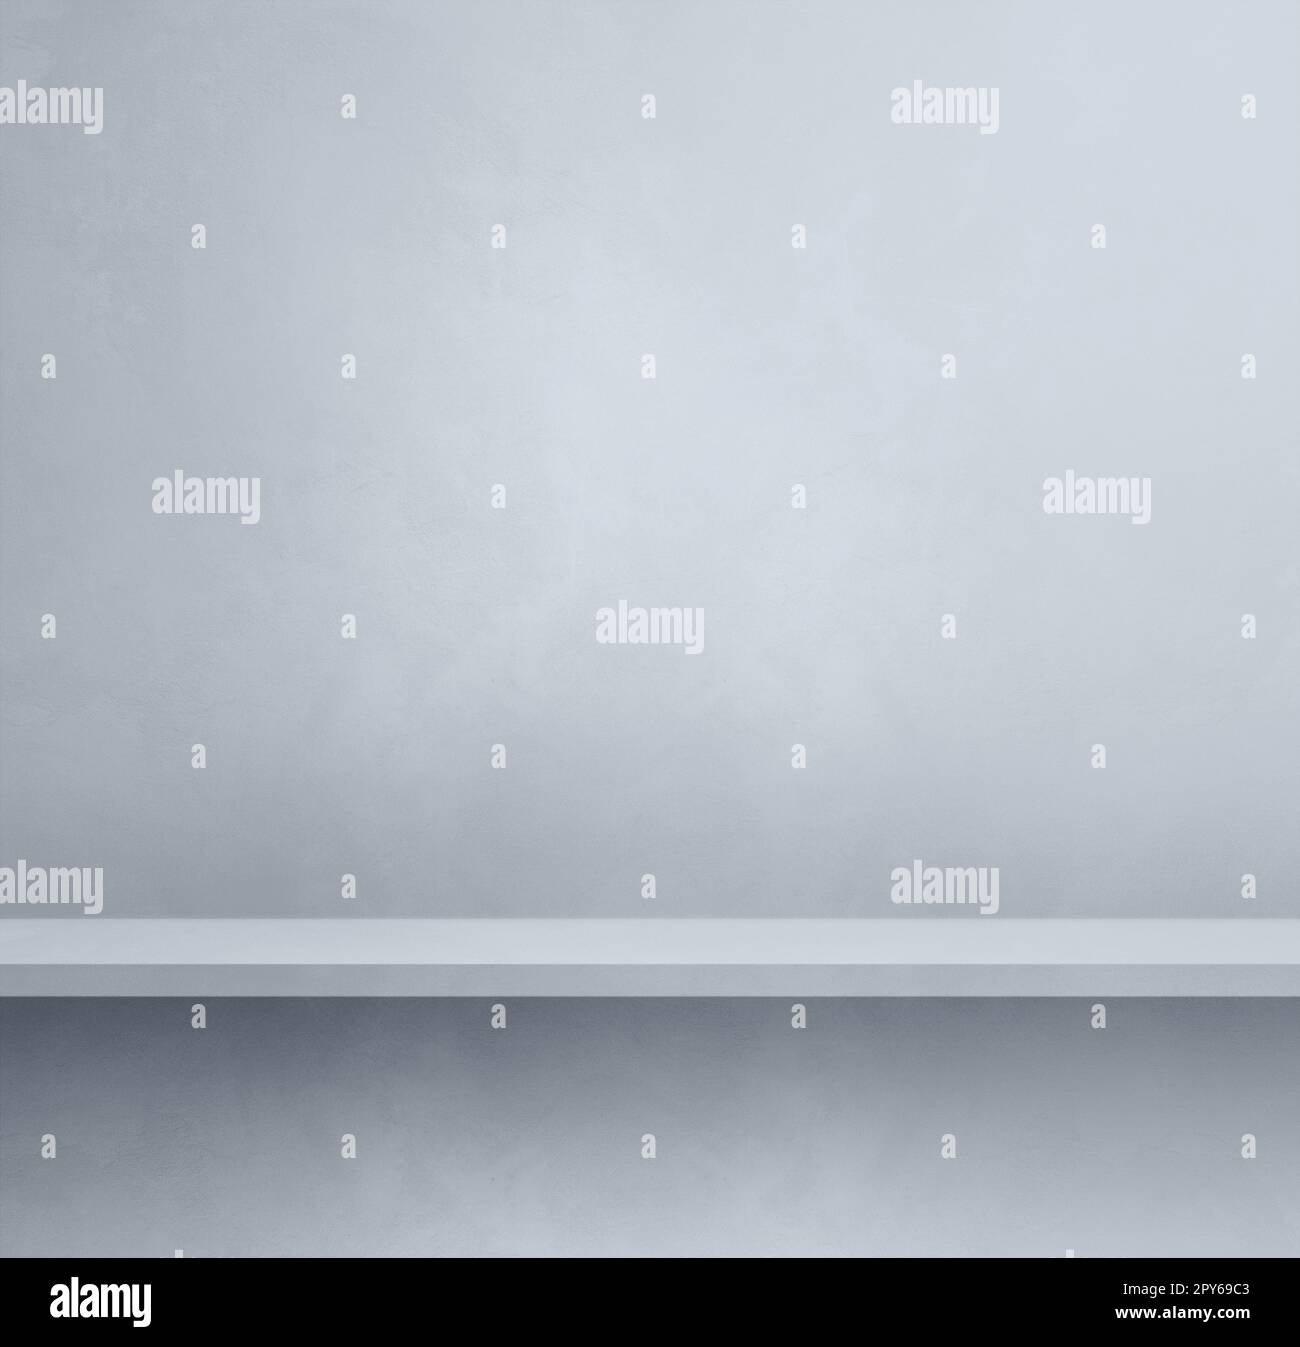 Empty shelf on a light grey concrete wall. Background template. Square mockup Stock Photo